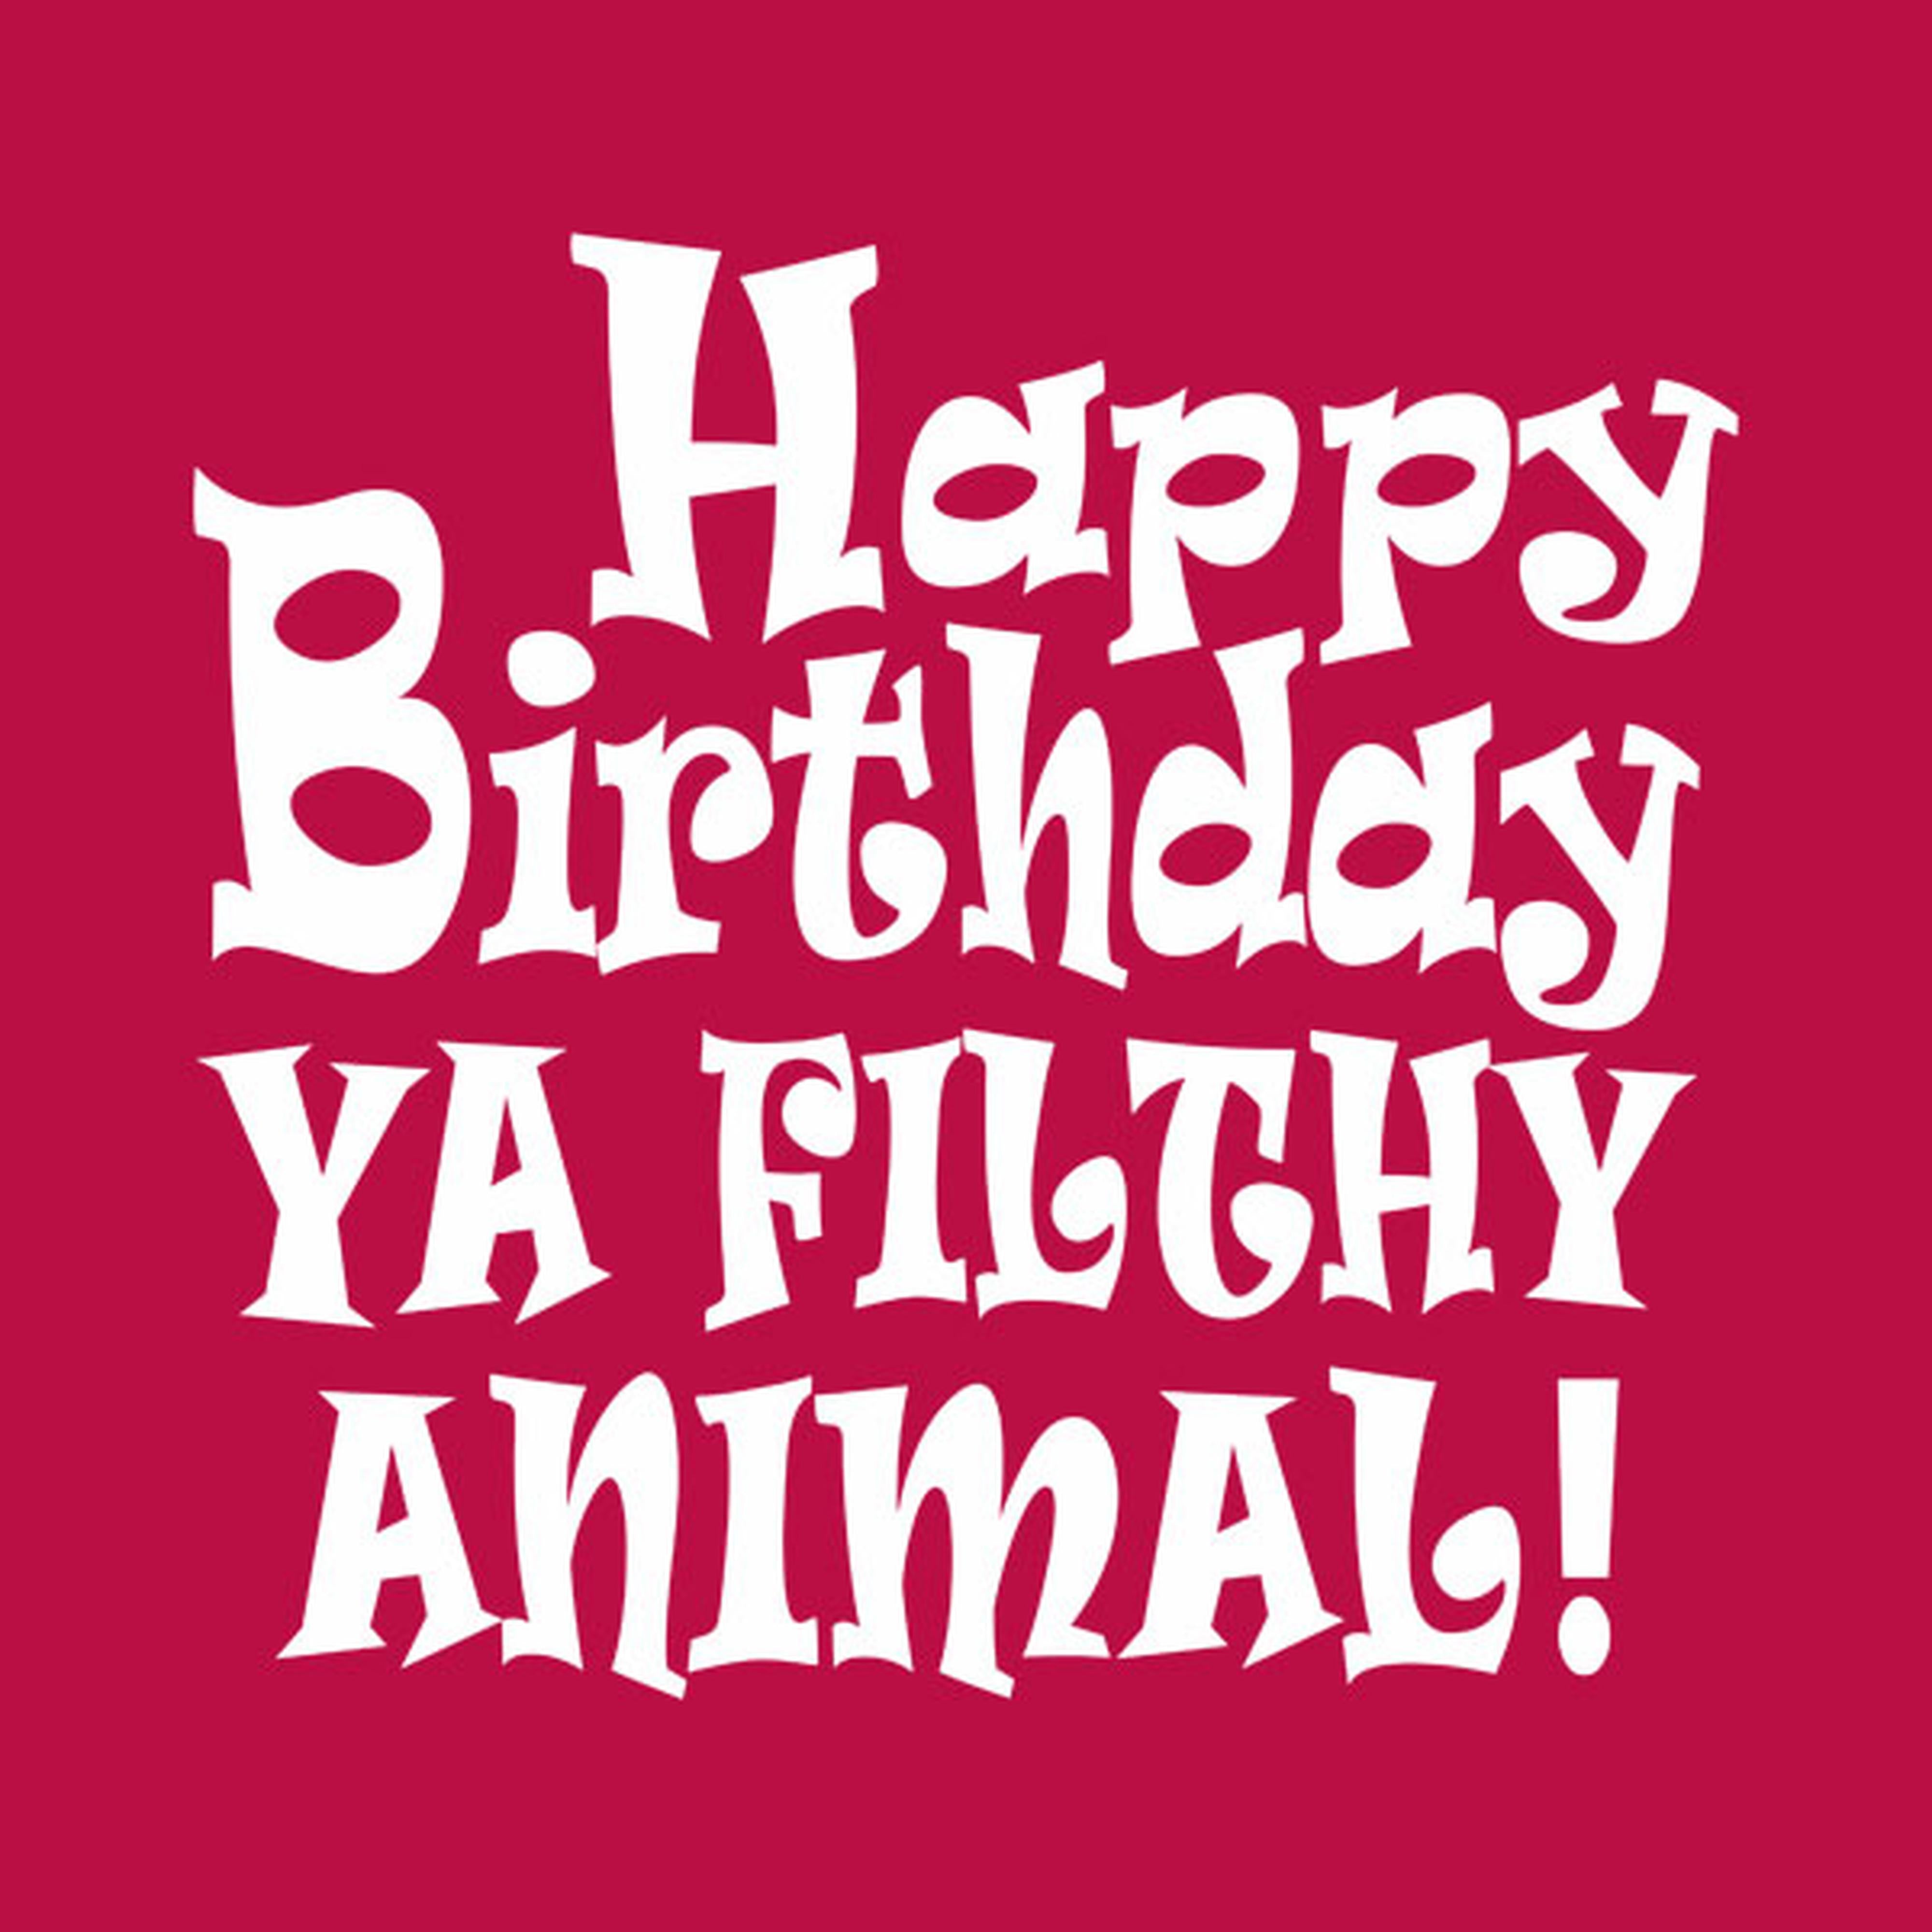 Happy birthday you filthy animal - T-shirt